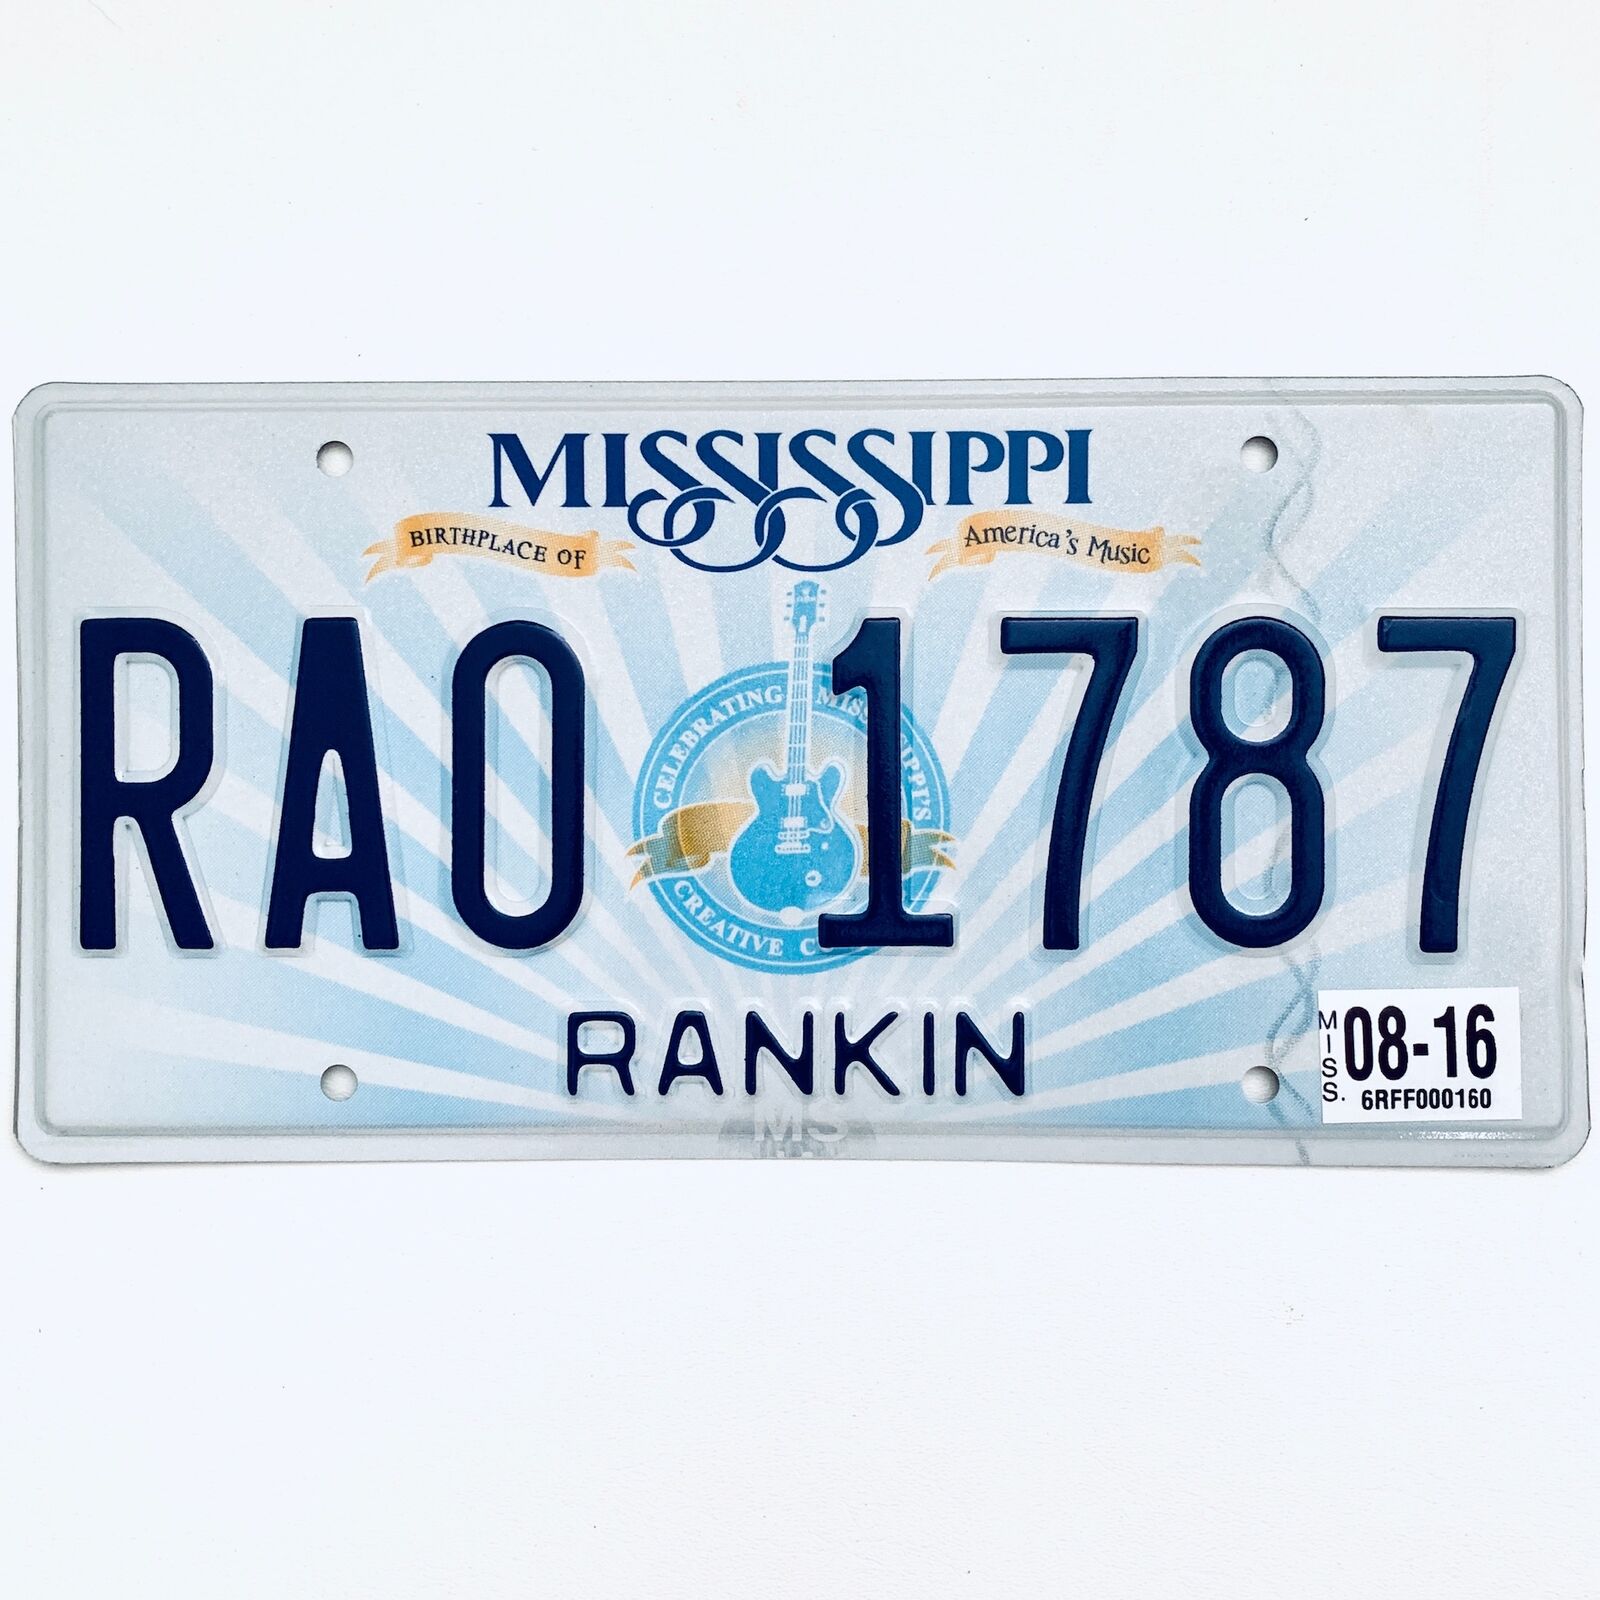 2016 United States Mississippi Rankin County Passenger License Plate RA0 1787